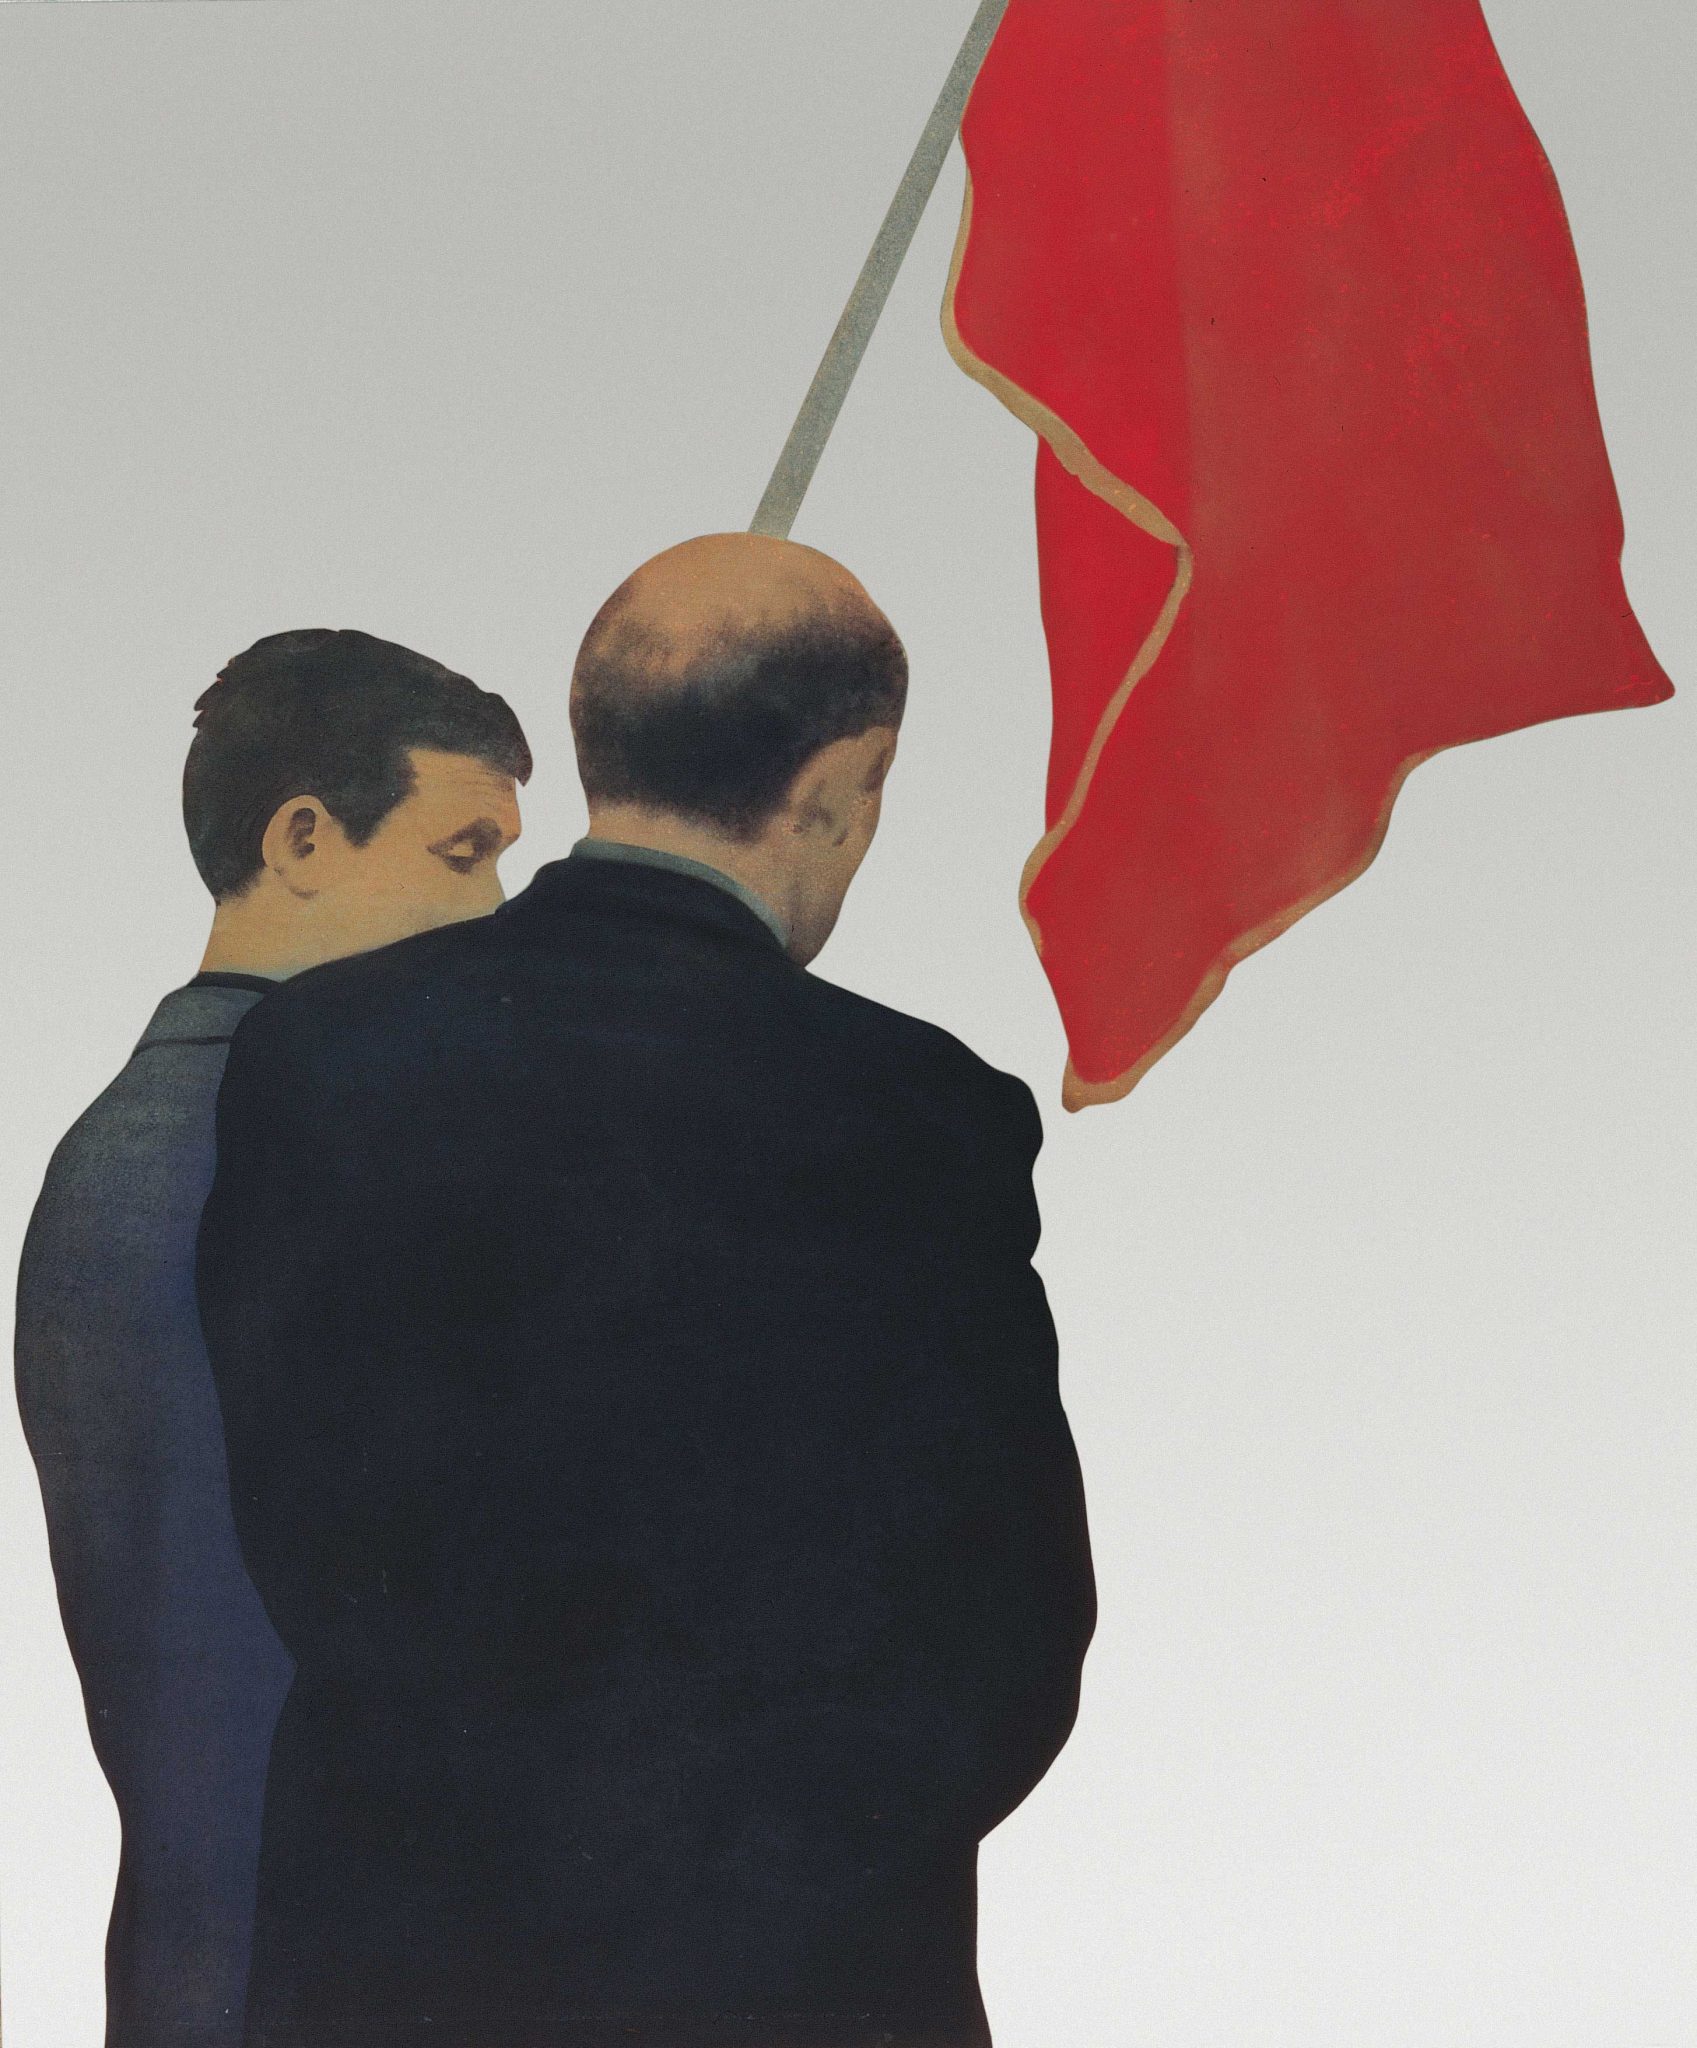 Bandiera Rossa (Comizio 1) 1966, François Pinault Collection. Courtesy the artist